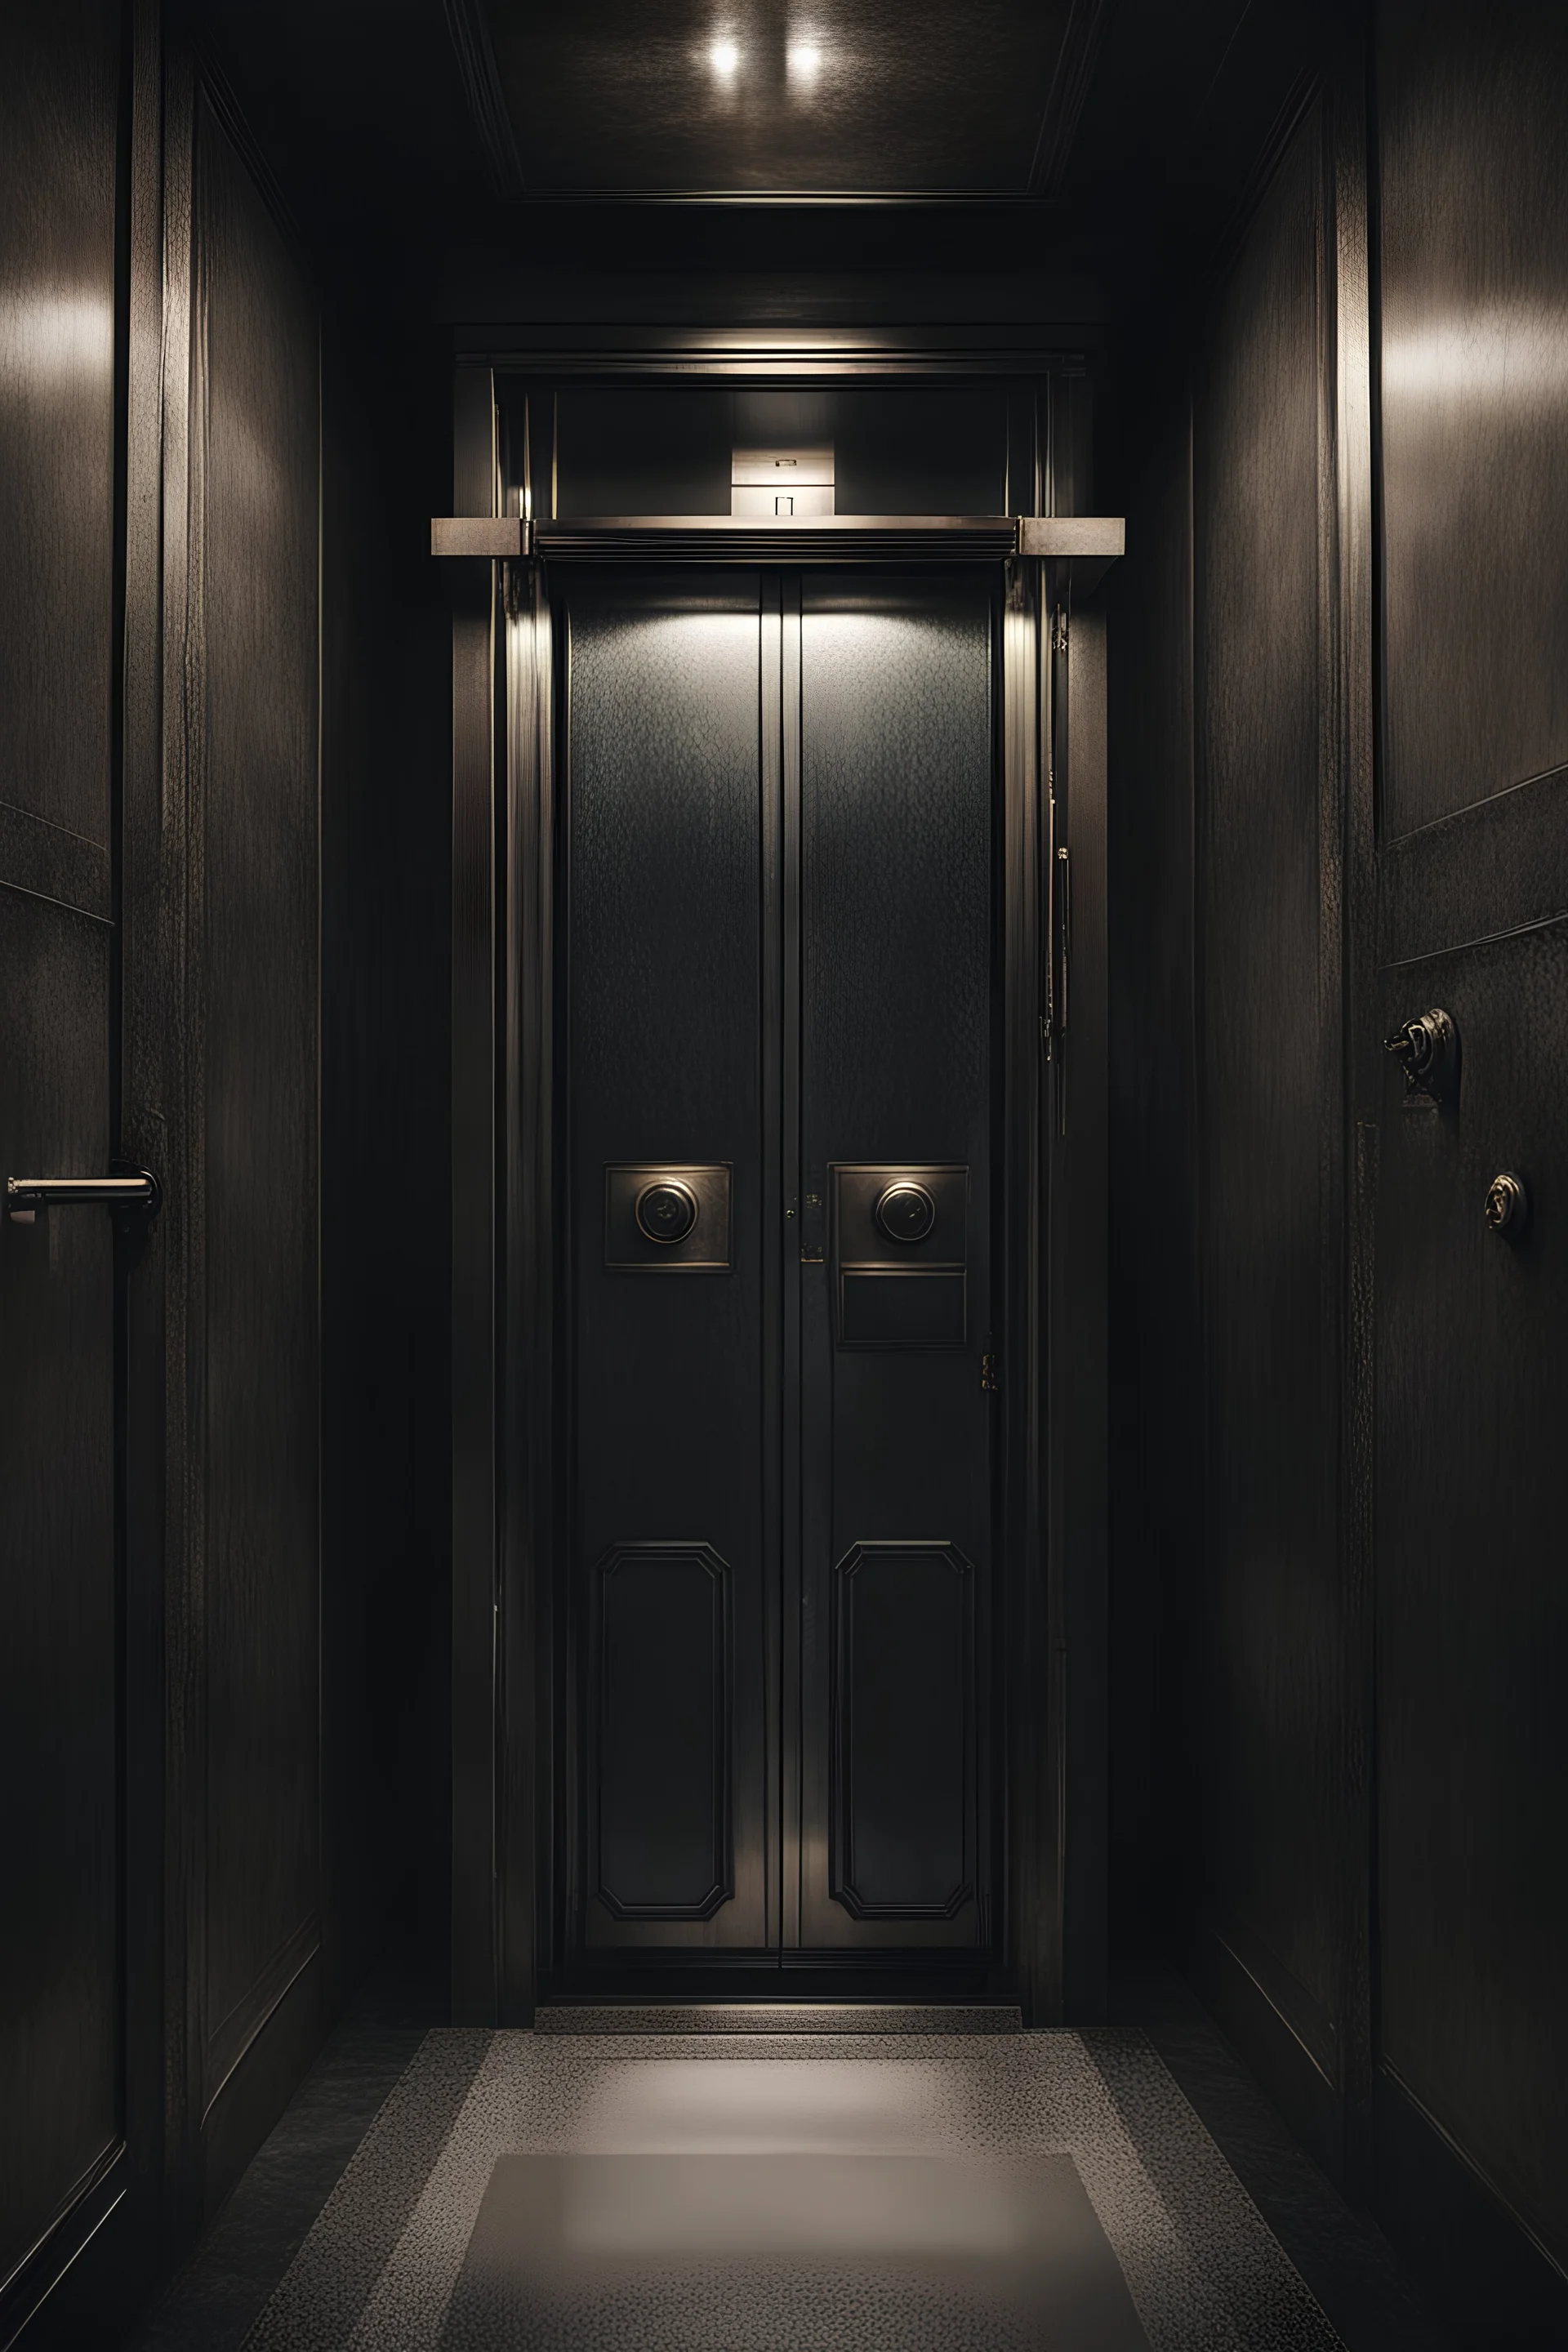 dark old fashioned elevator